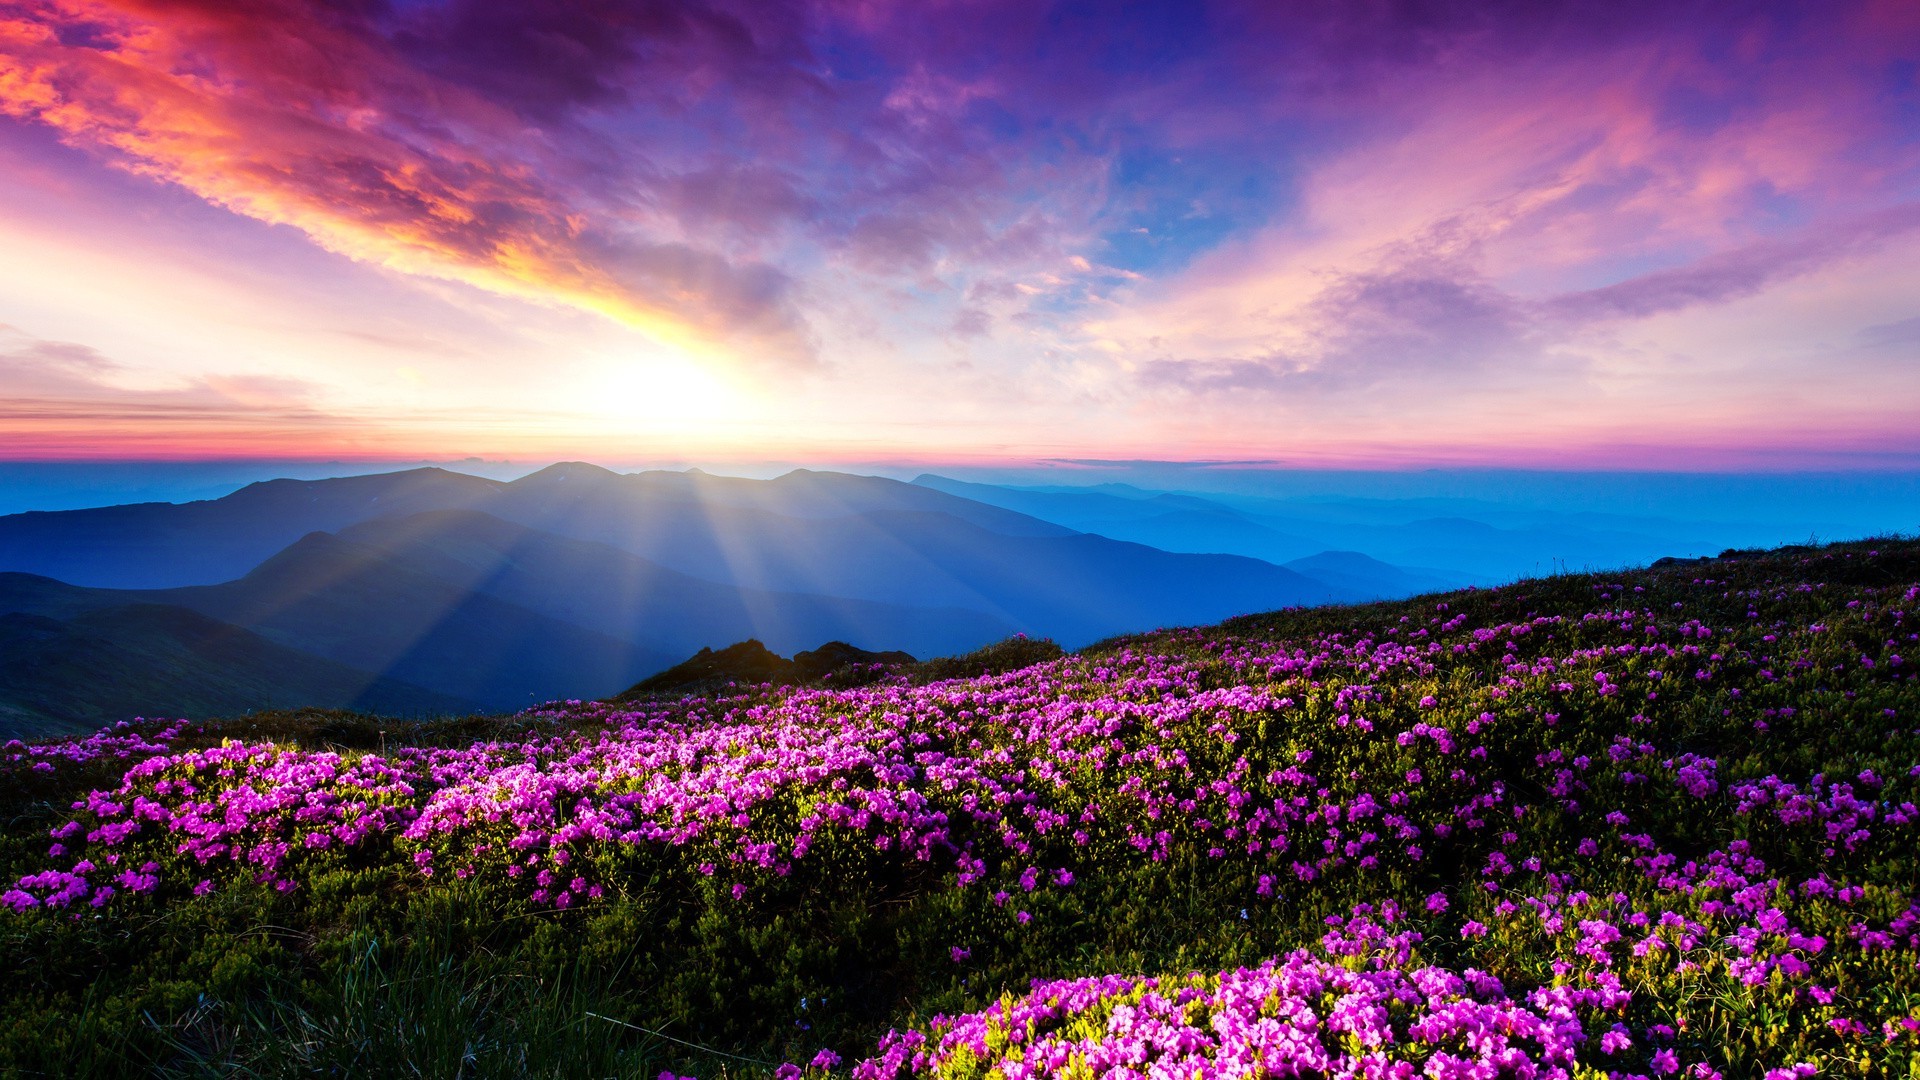 1920x1080 flowers landscape pink flowers mountain sunlight sun rays ukraine wallpaper JPG 633 kB